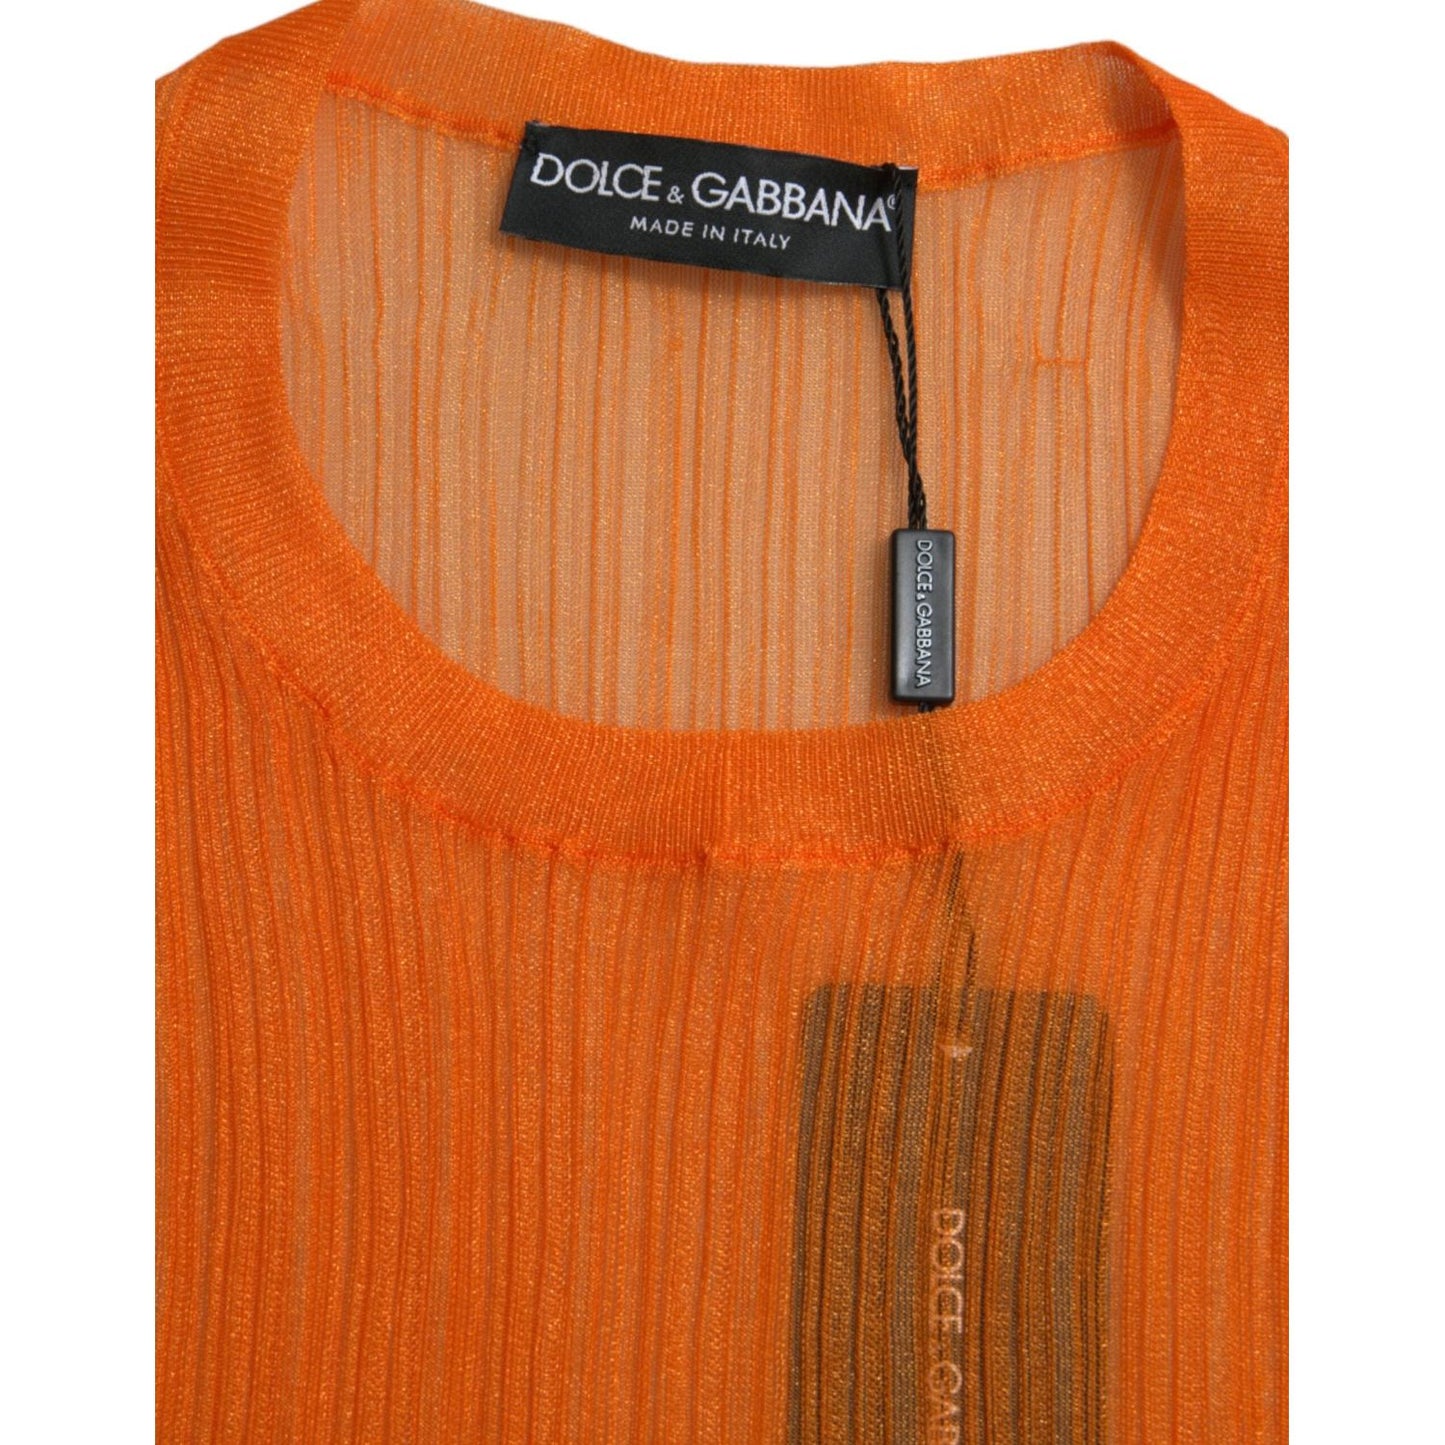 Dolce & Gabbana Chic Orange Crew Neck Tank Top orange-see-through-crew-neck-blouse-tank-top